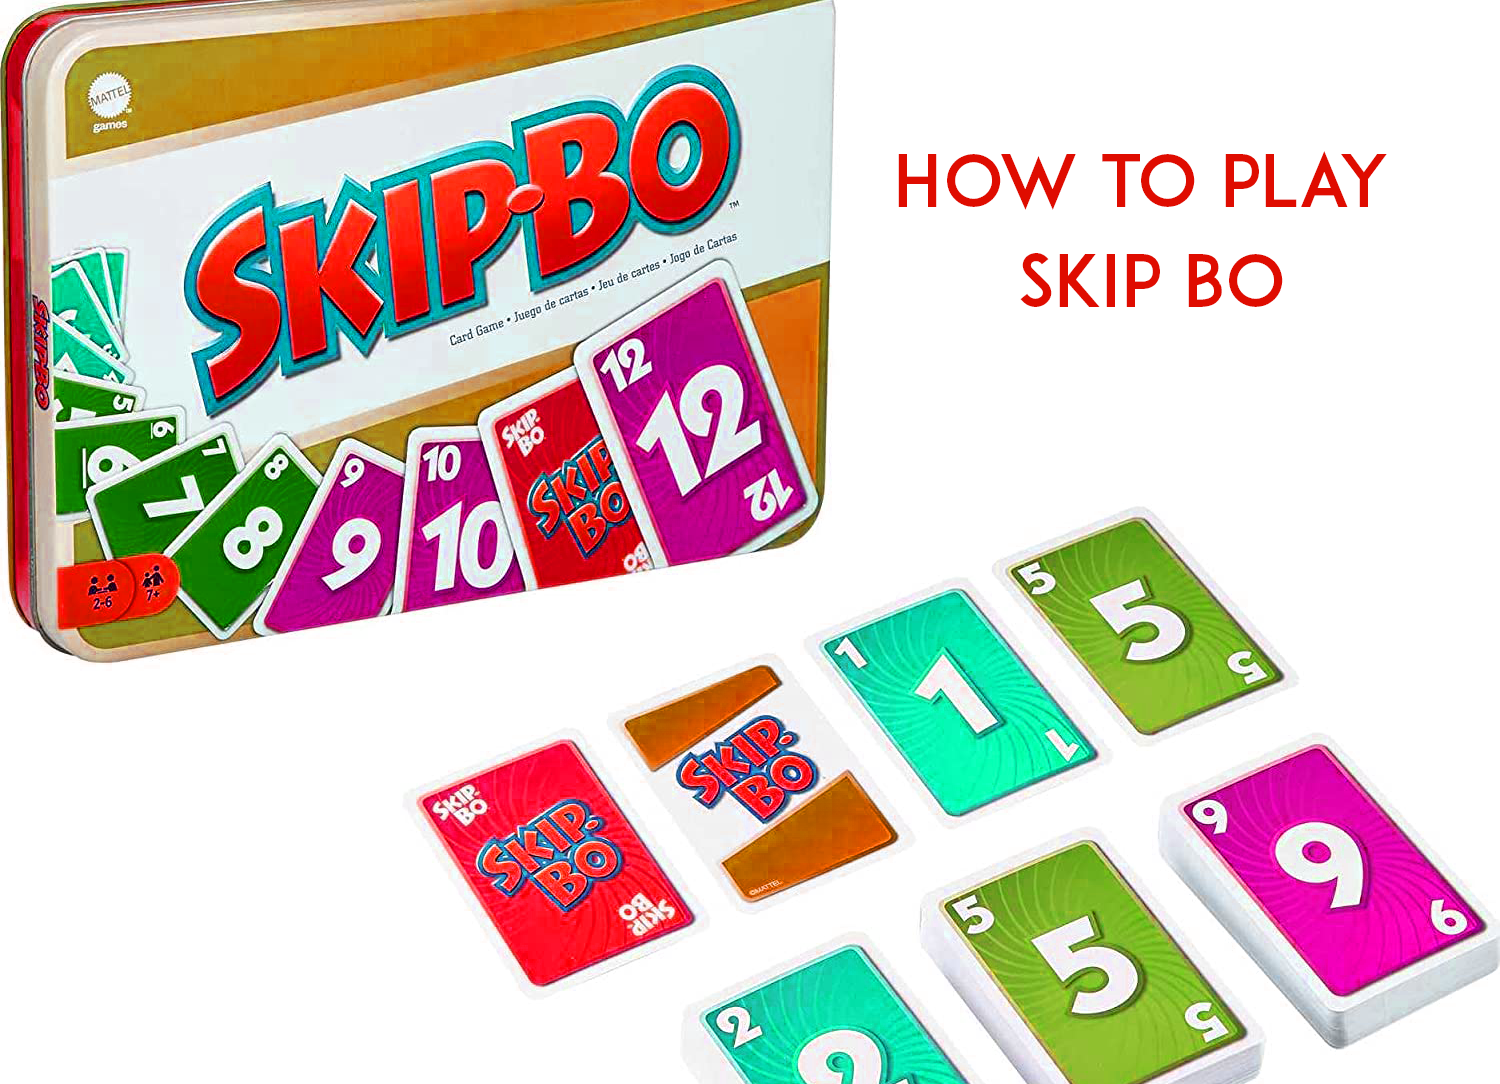 How to play Skip-Bo